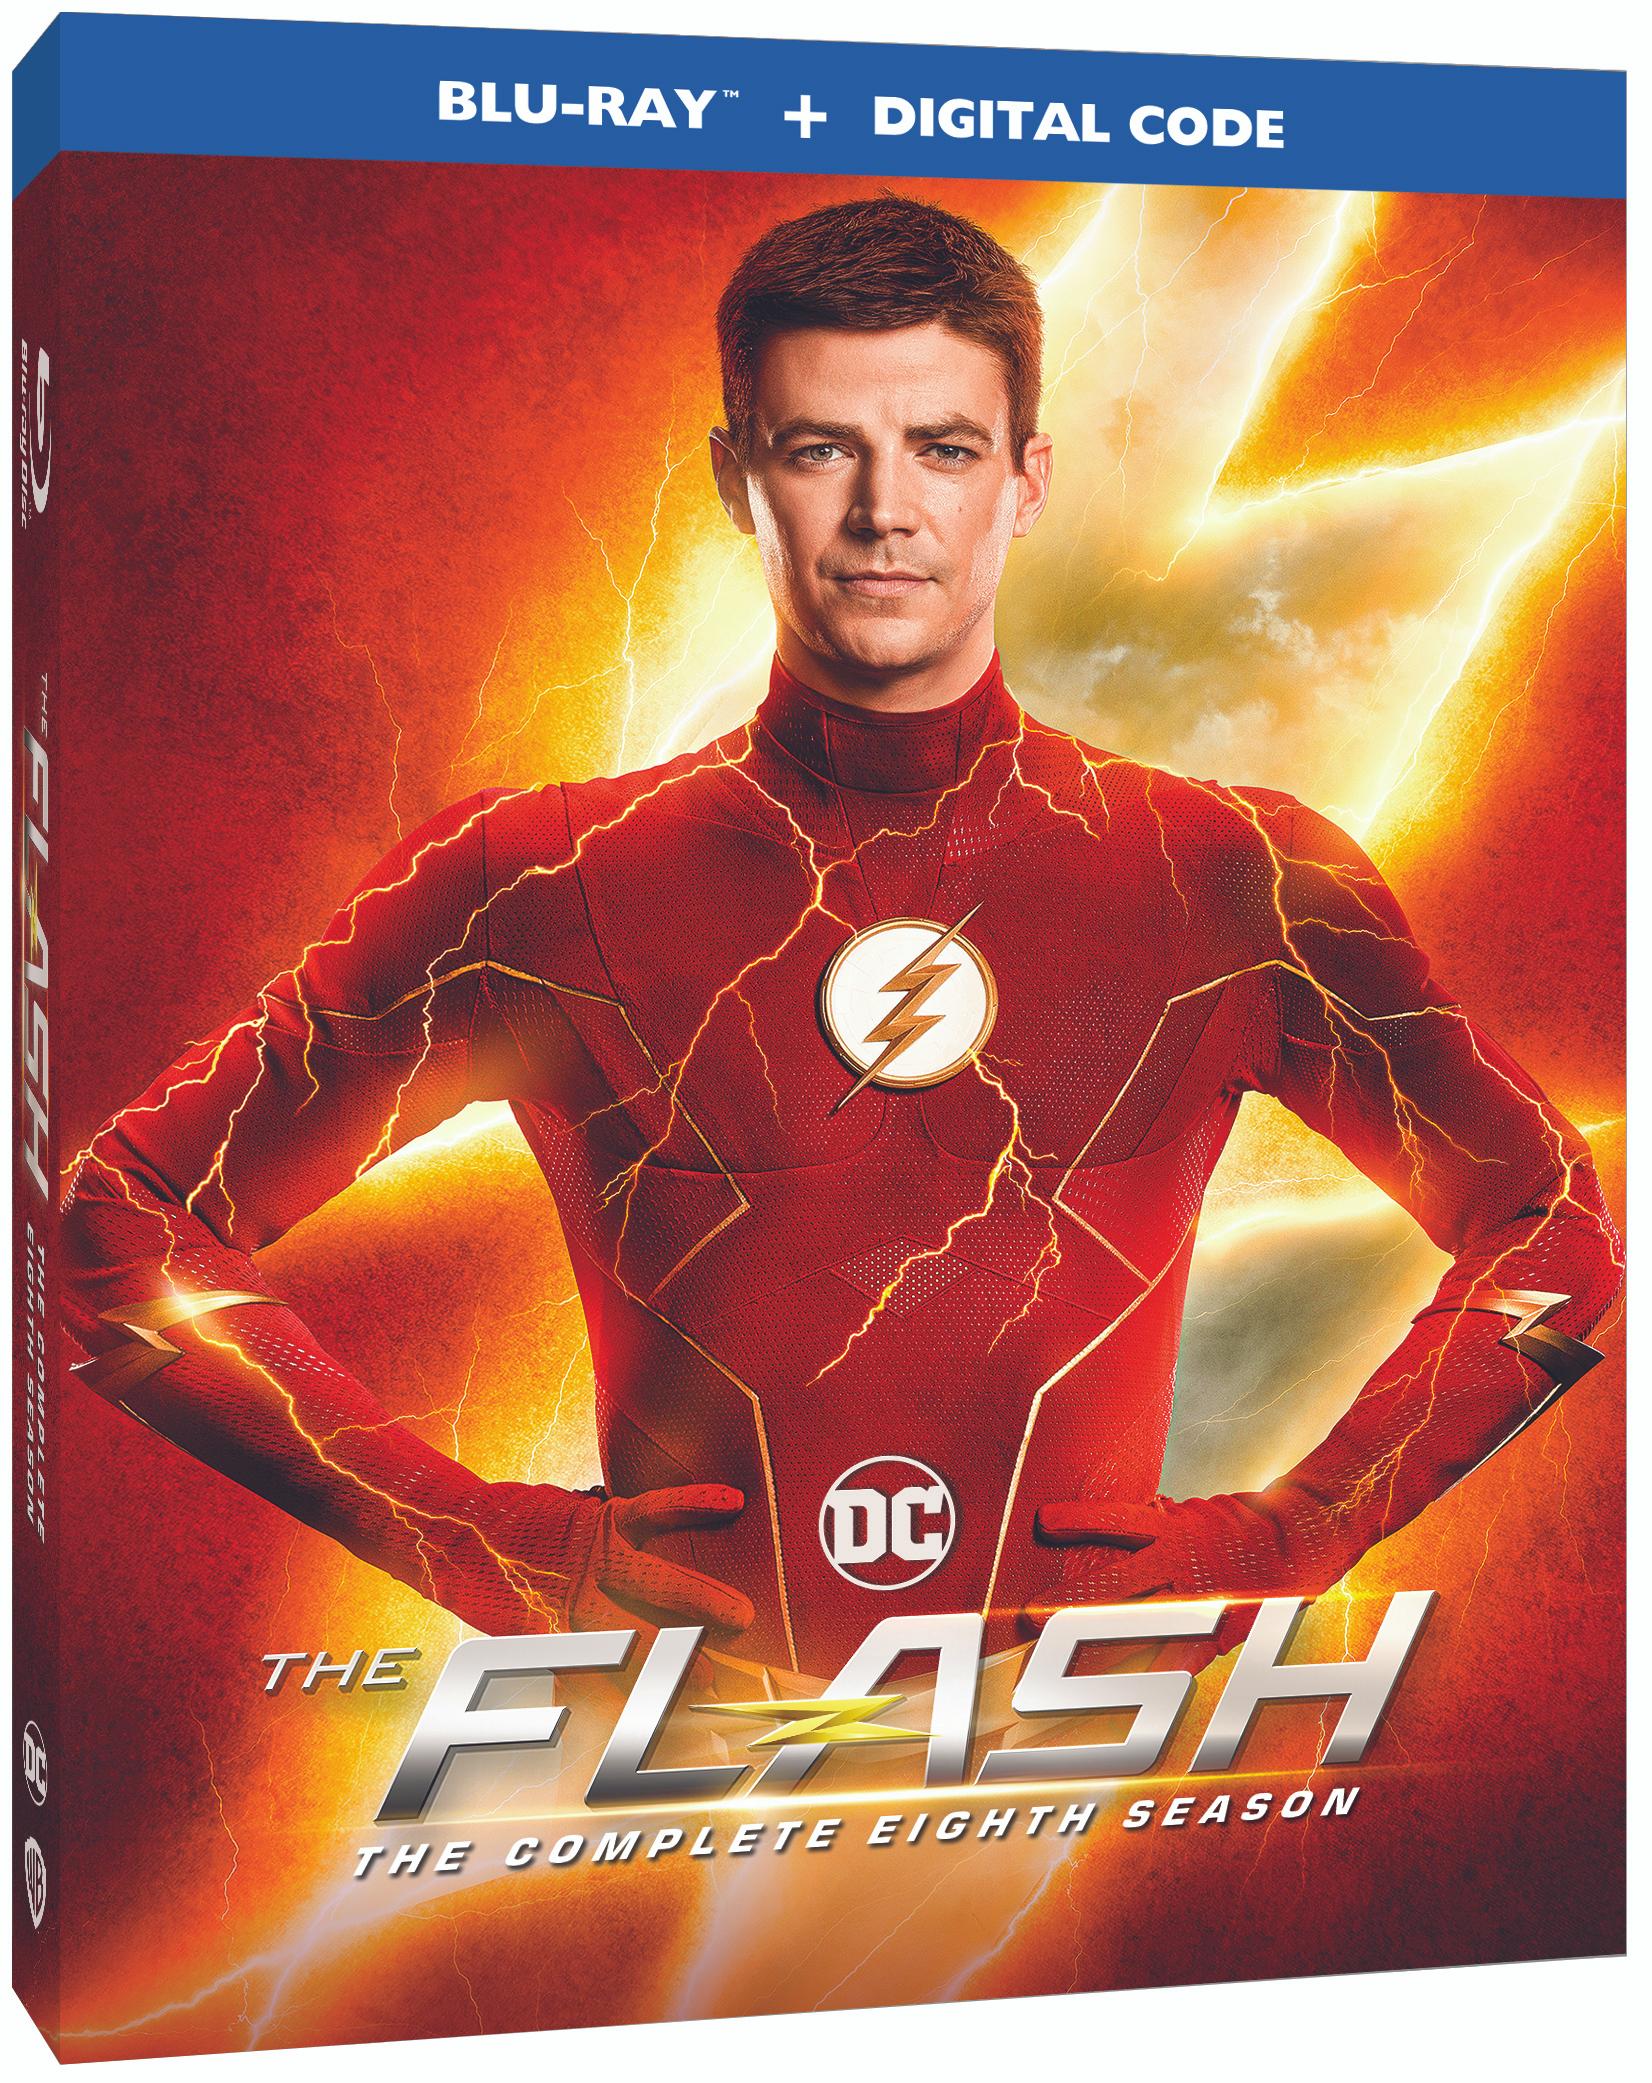 The Flash' Season 8 on Blu-ray  DVD October 18, 2022